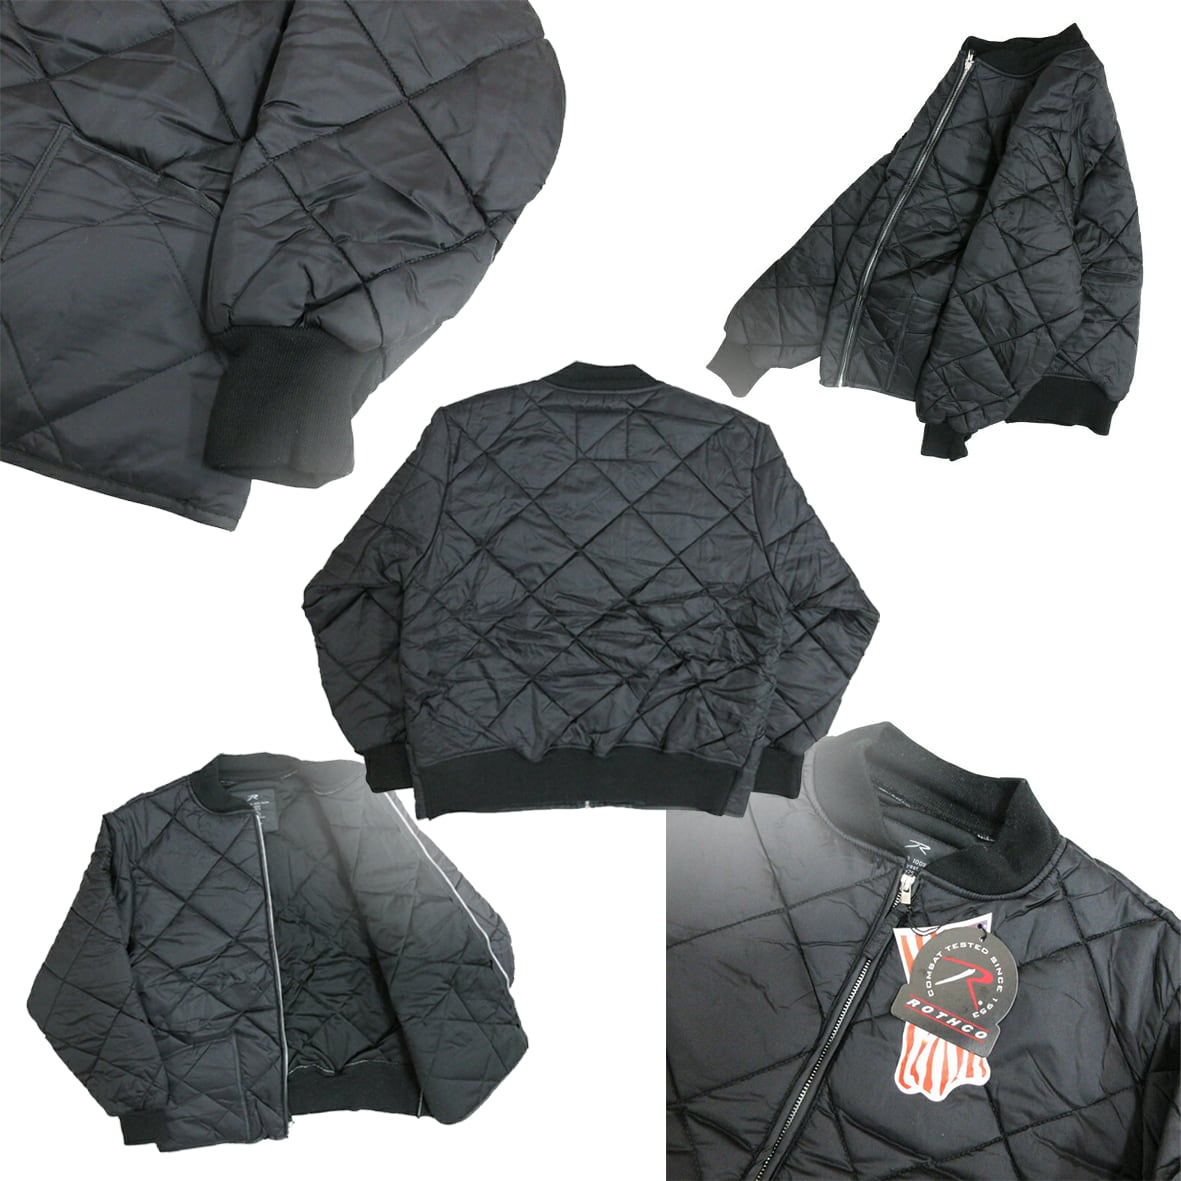 ROTHCO ロスコ Diamond Nylon Quilted Flight Jacket (品番7160)